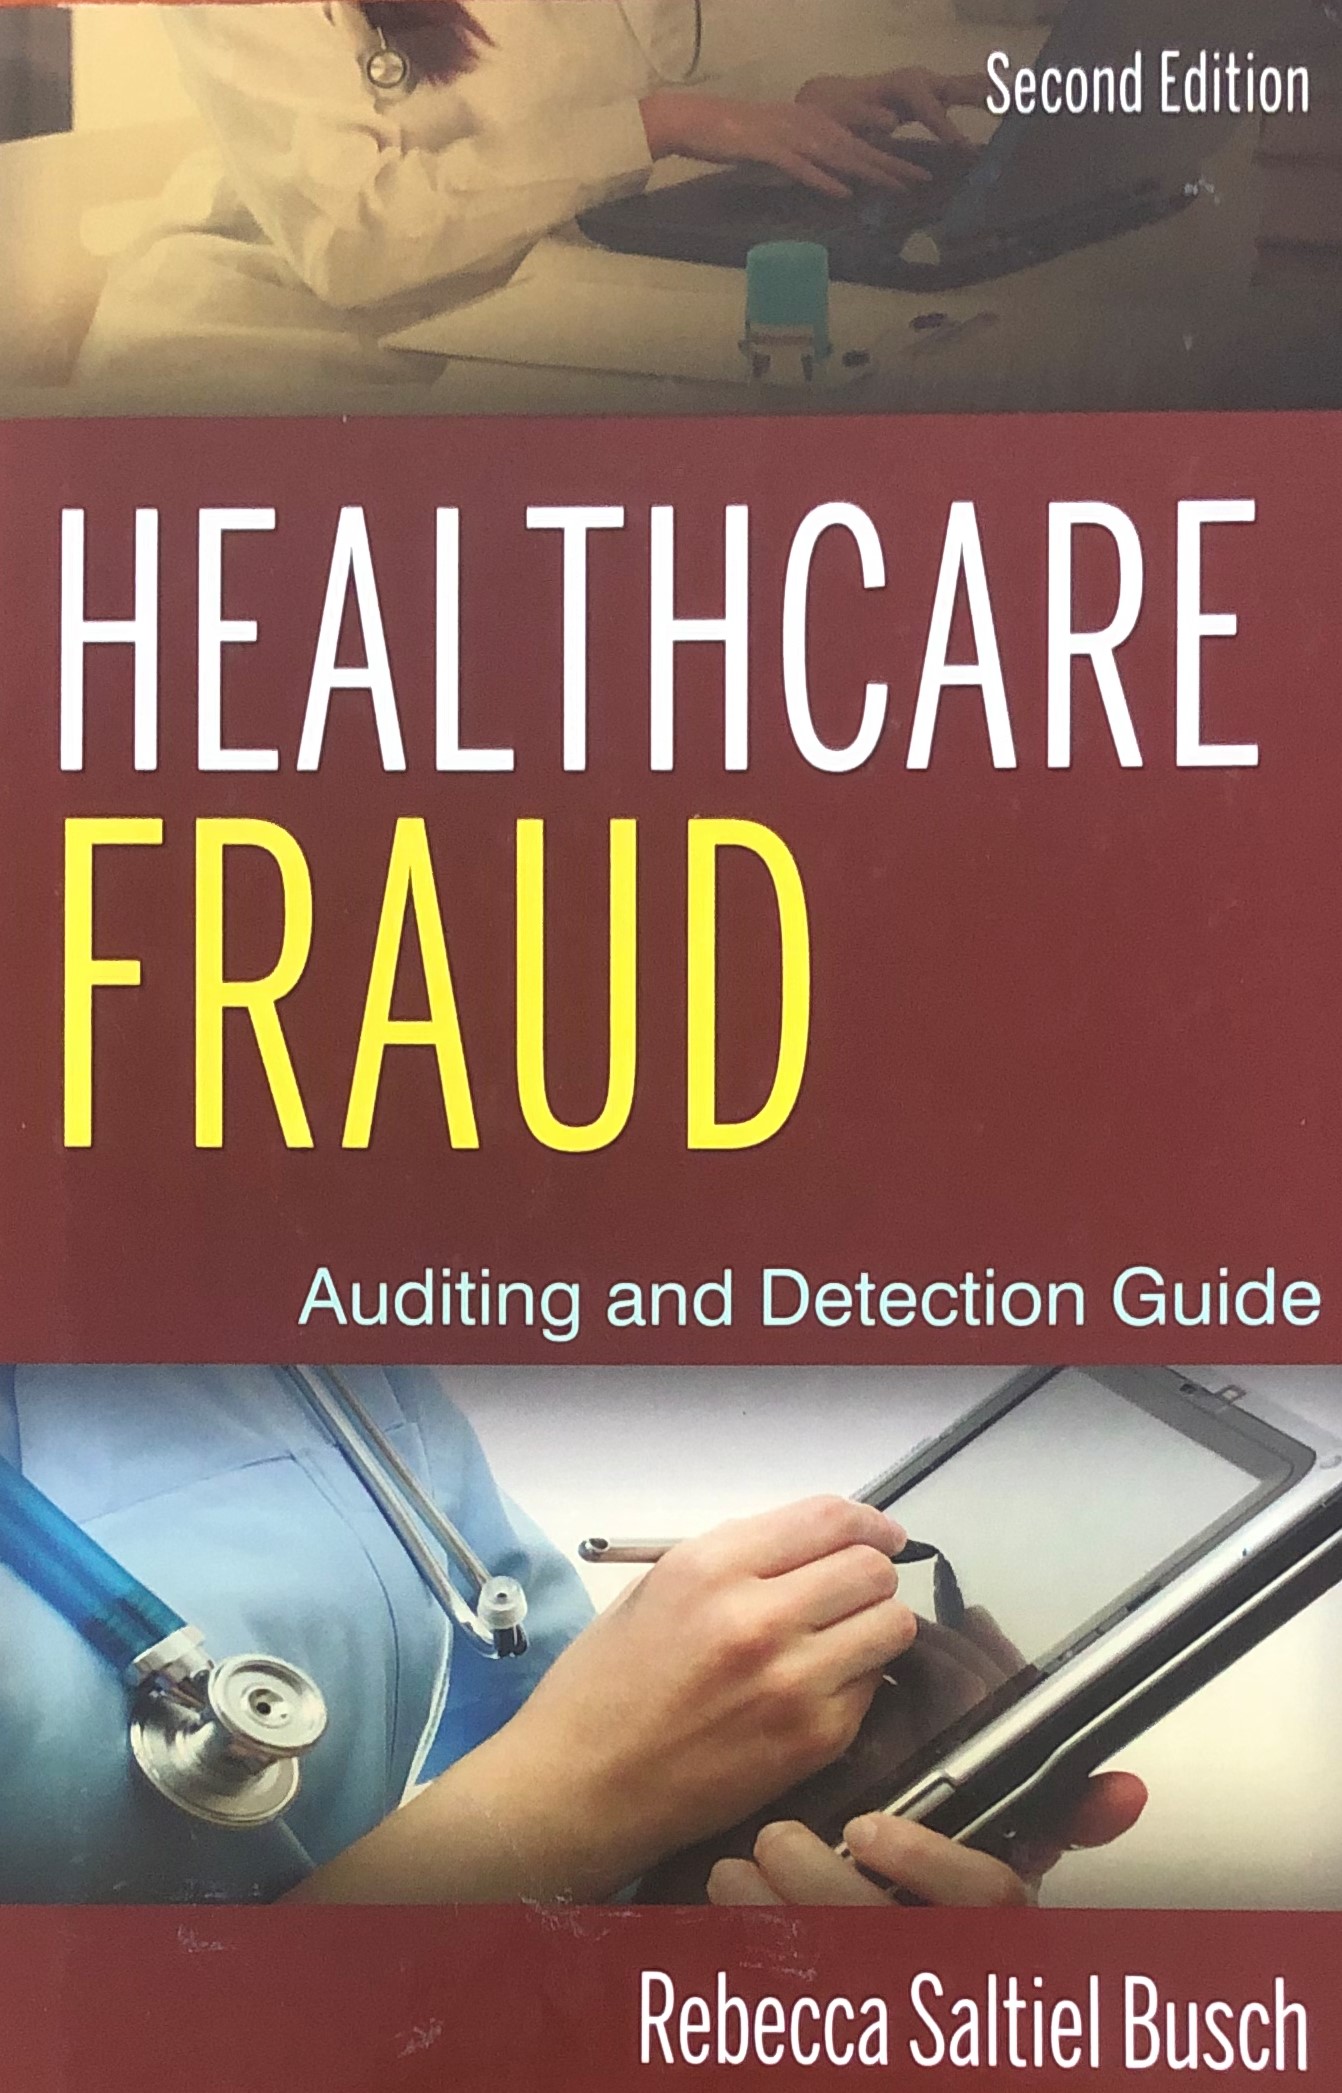 Description Healtcare Fraud: Auditing & Detection Guide